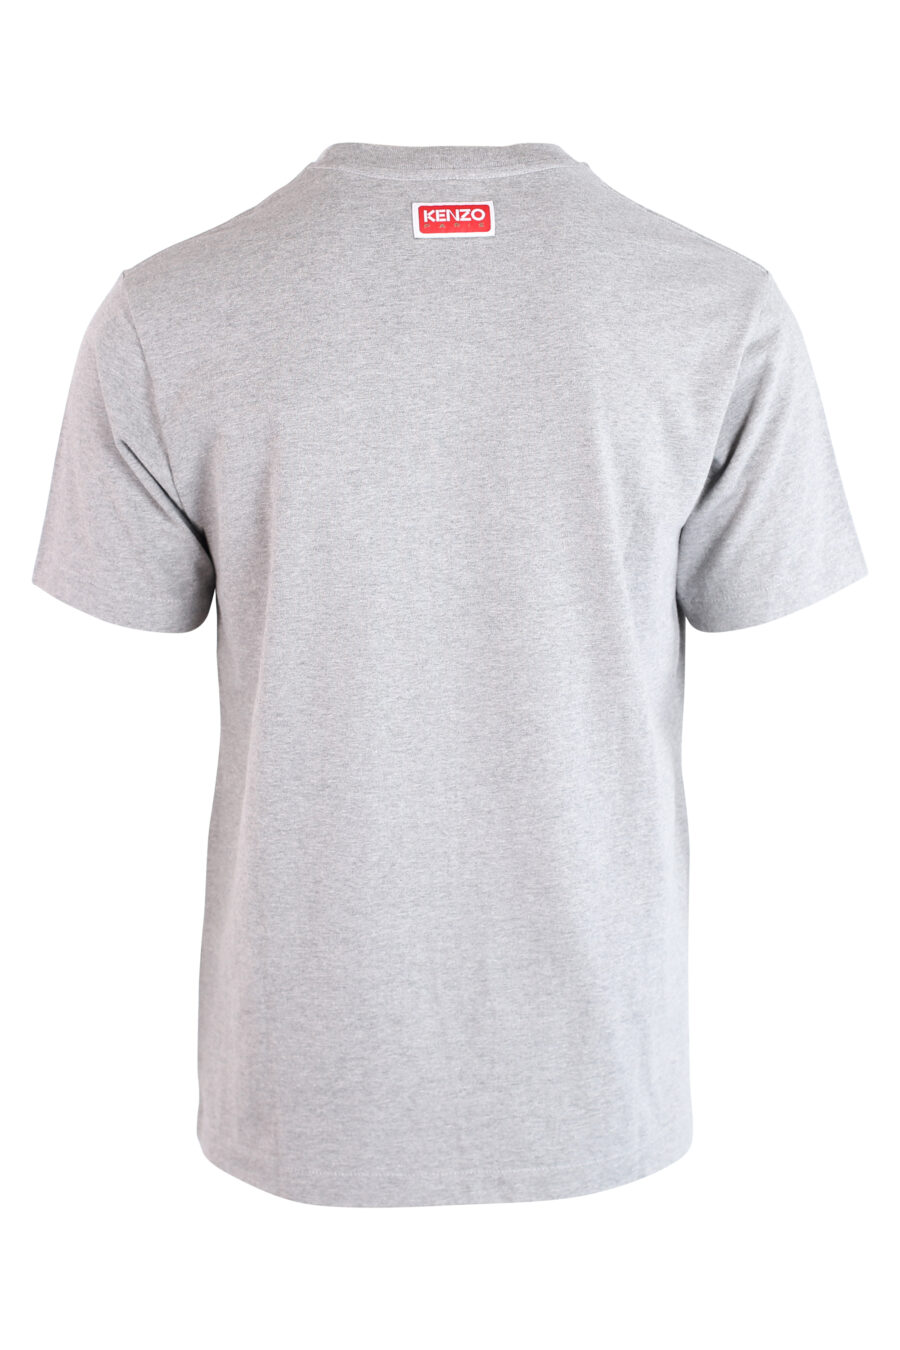 T-shirt grey with violet "K" maxillogram - IMG 3202